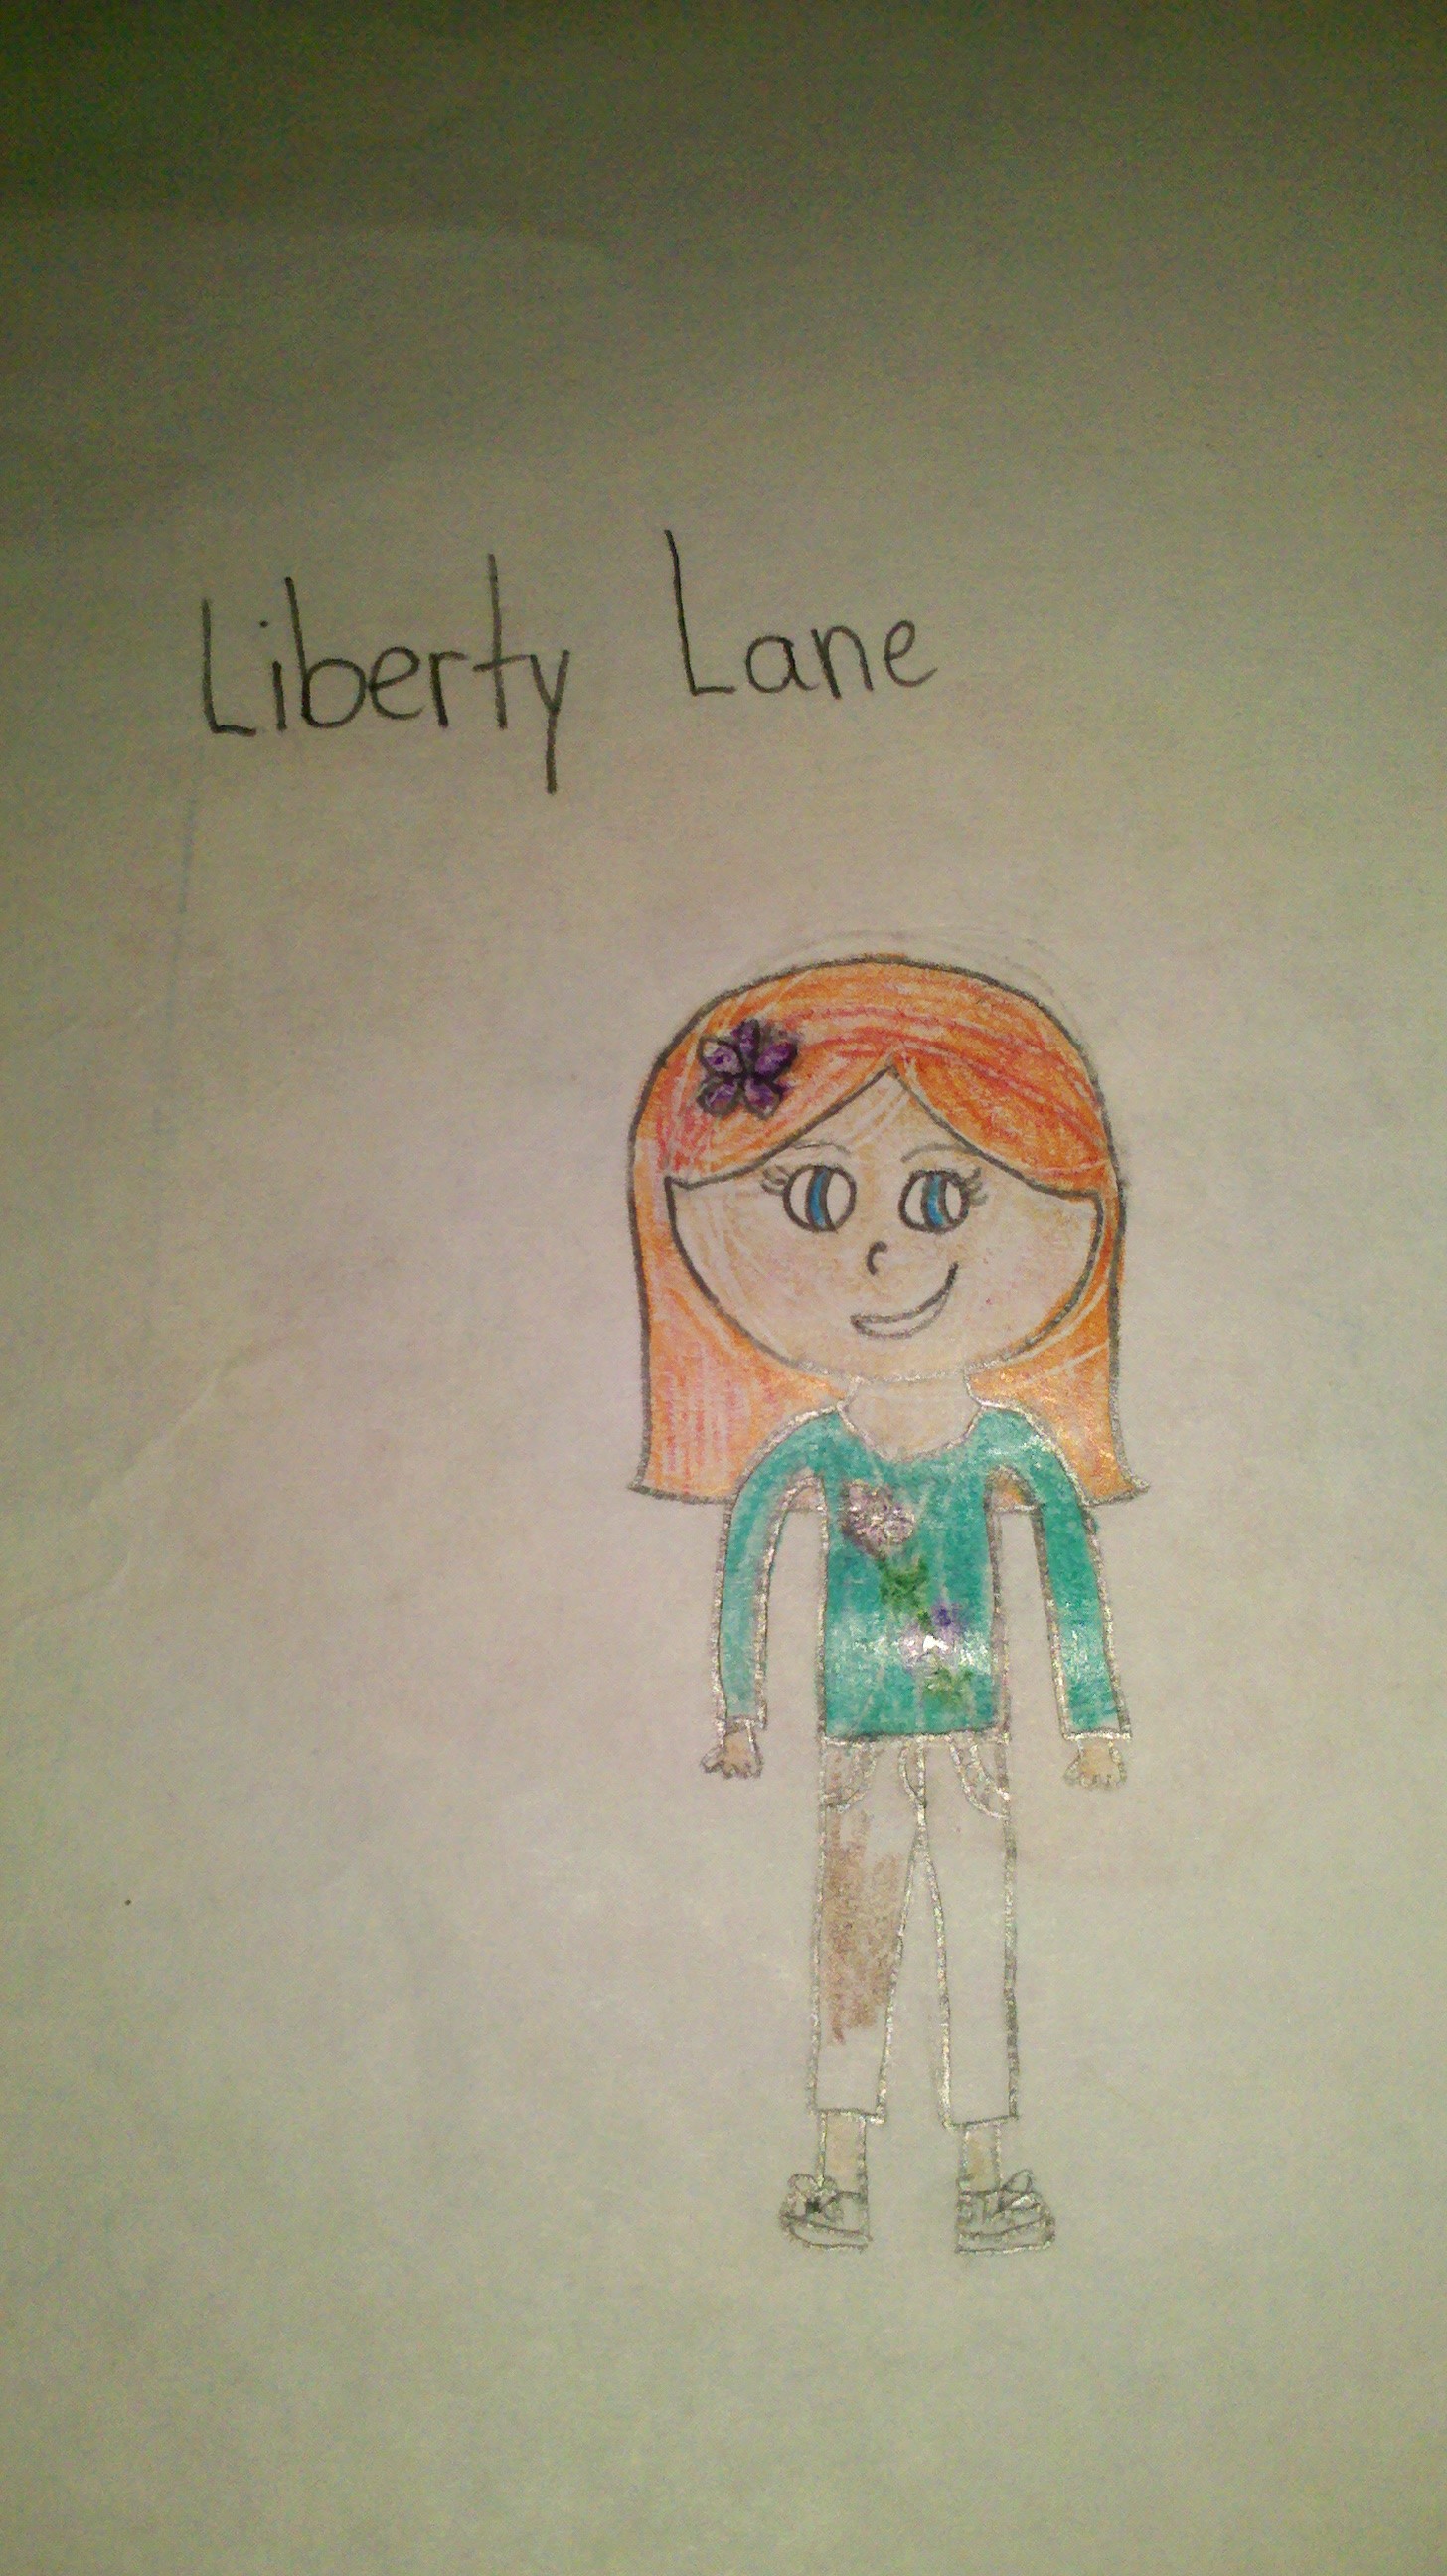 Liberty Lane, courtesy of Claudia Alvarez